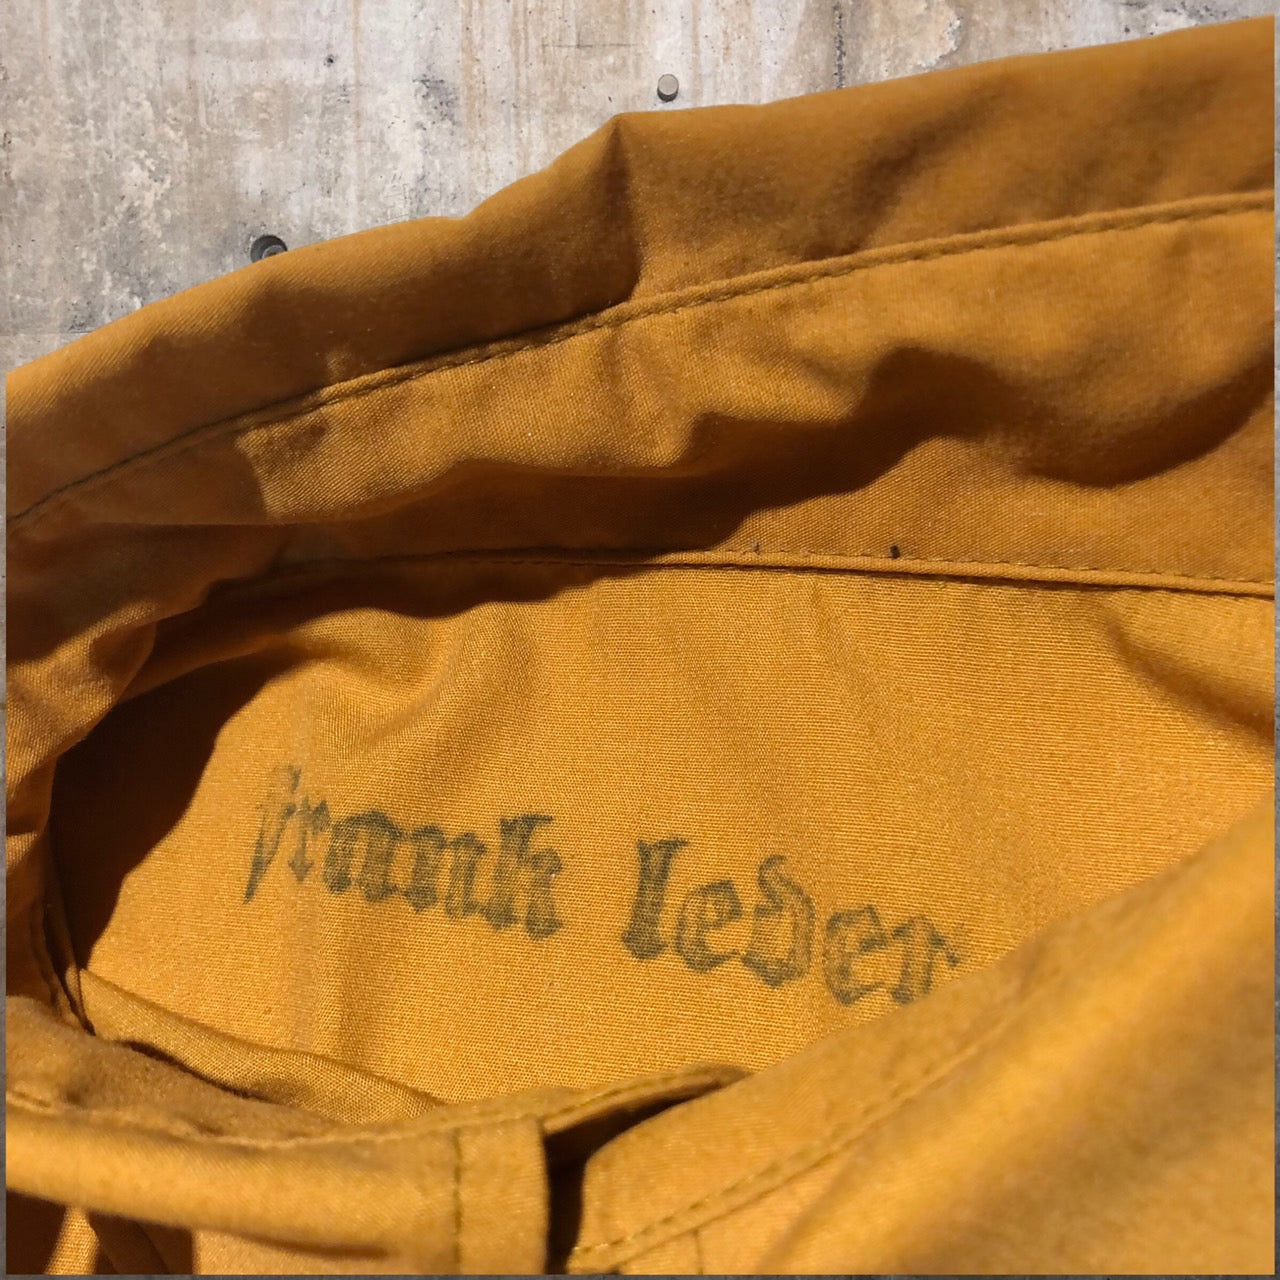 FRANK LEDER(フランクリーダー) ドローコードプルオーバーシャツ 0216025 2 イエロー